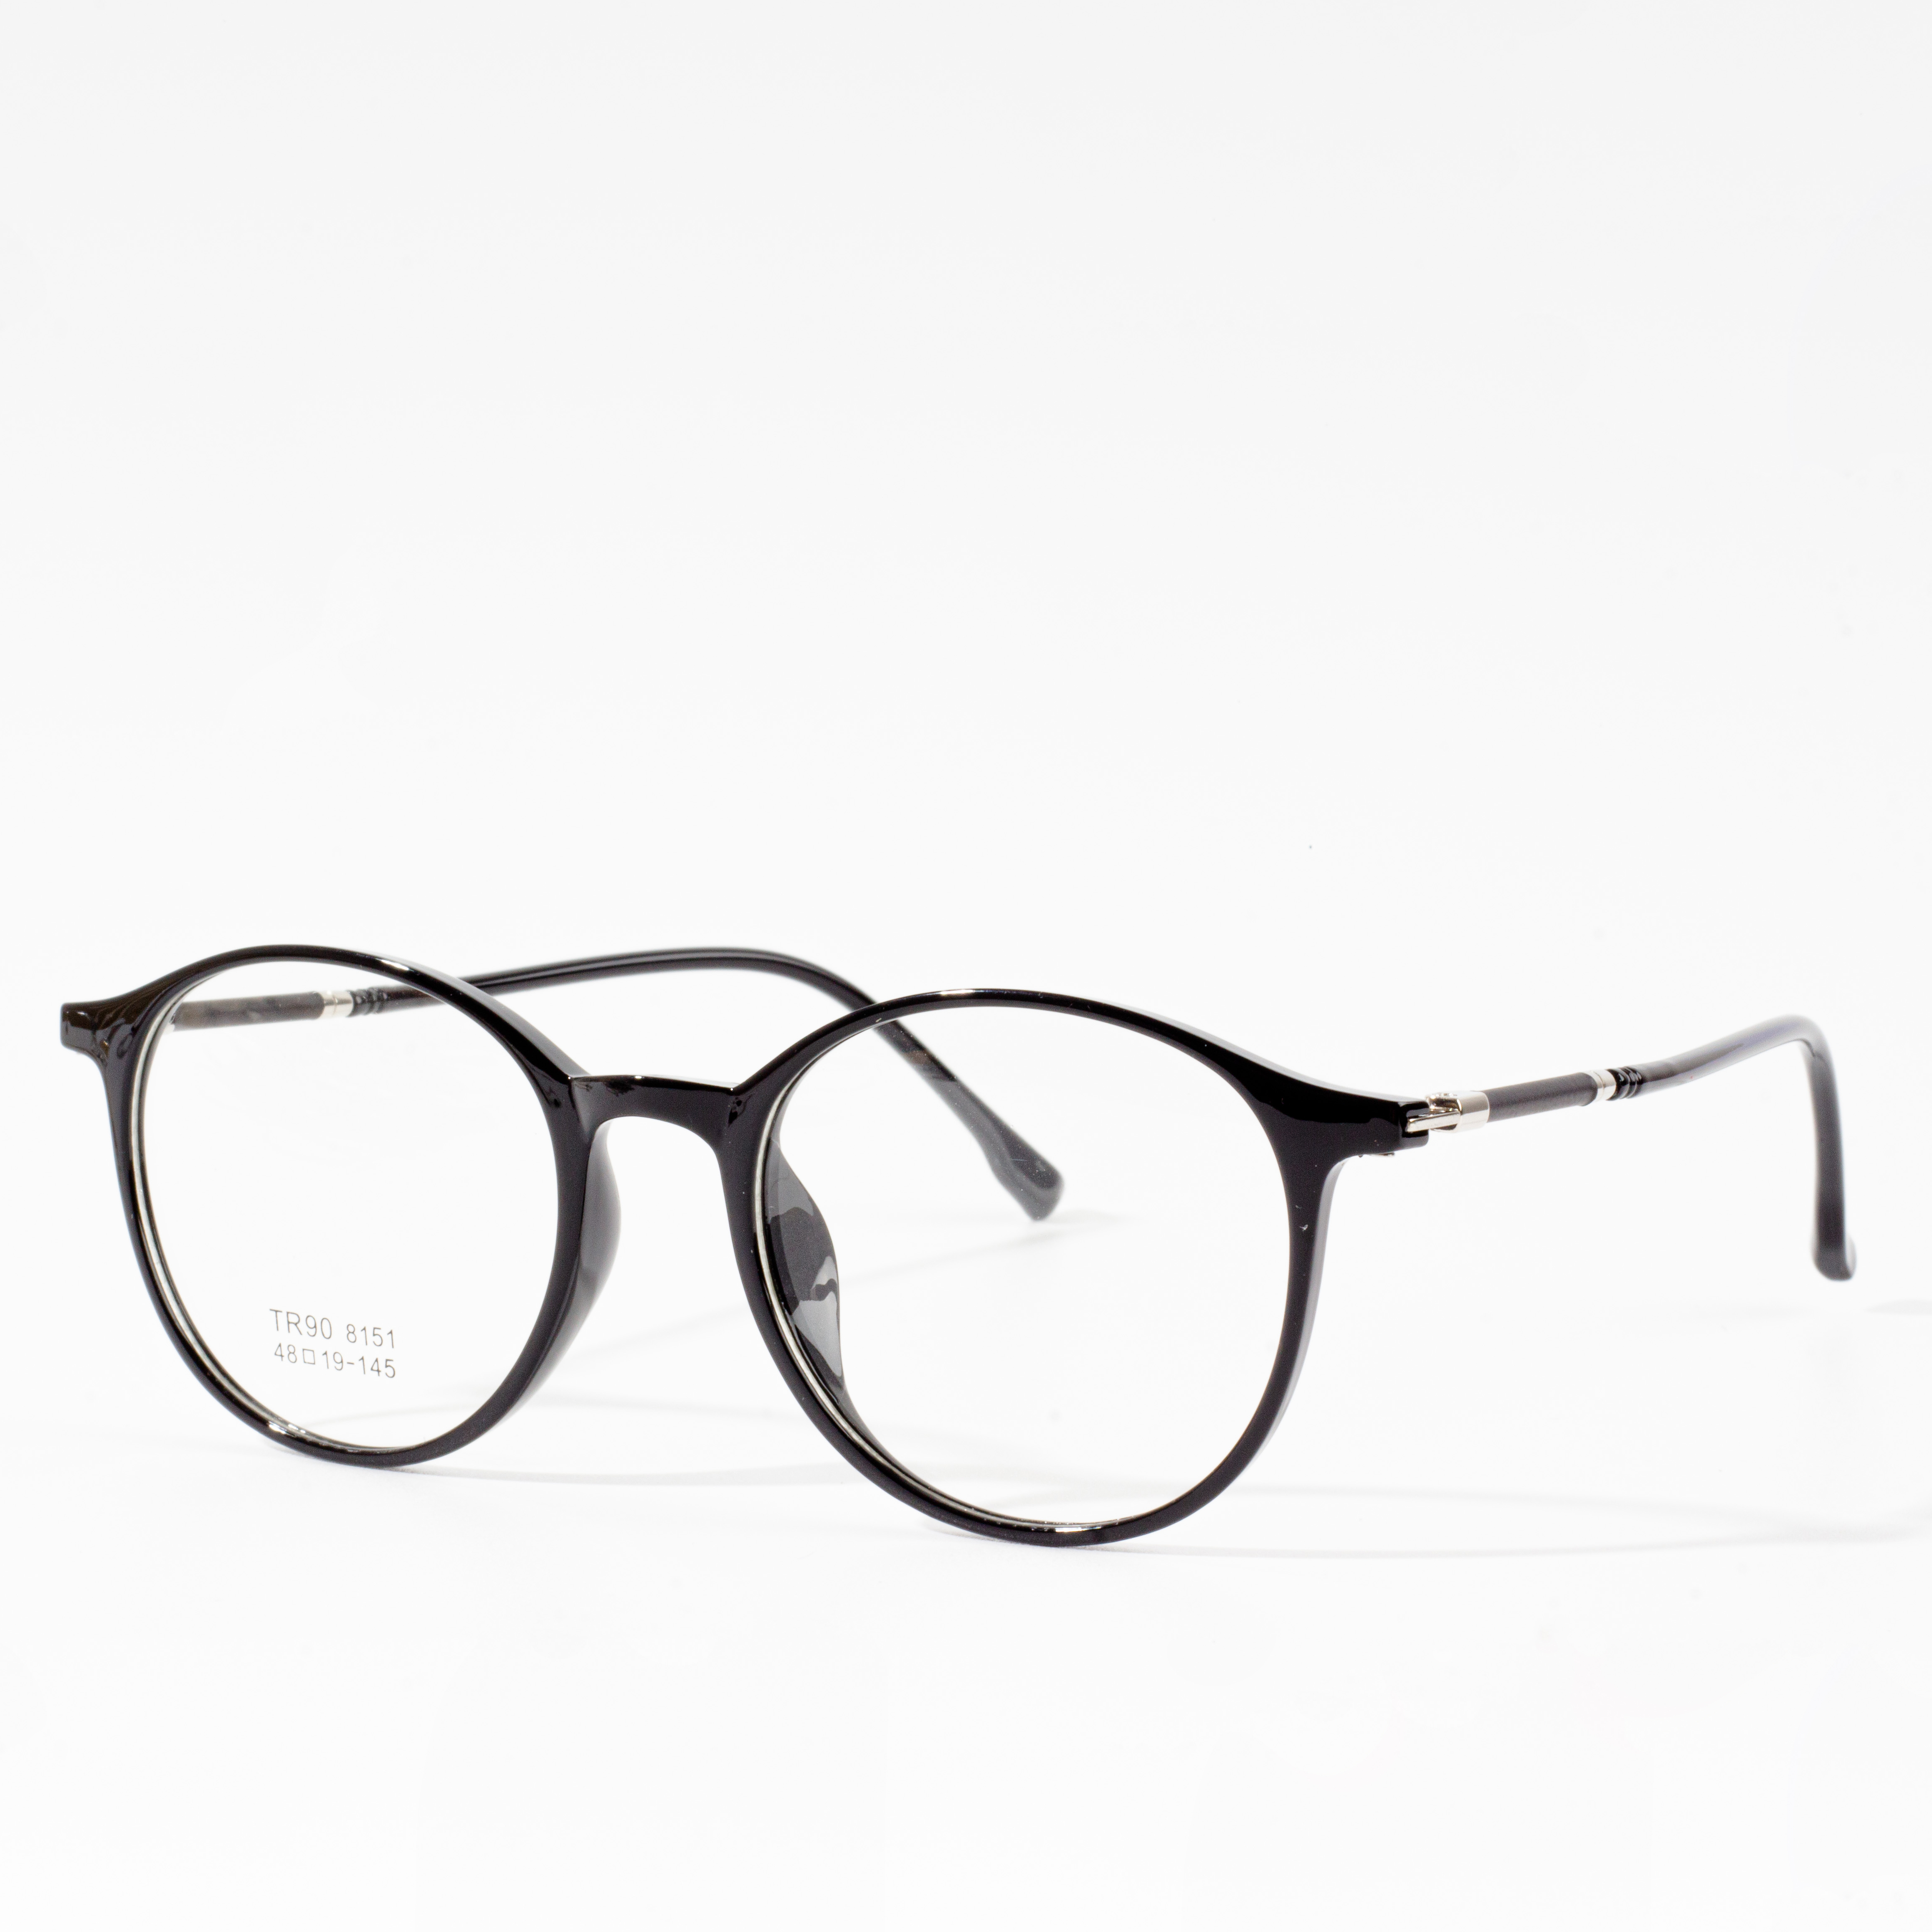 Mens & Womens Designer Frames - Eyeglasses.com 广告· https://www.eyeglasses.com/ (888) 896-3885 Shop Designer Frames From Top Global Eyeglass Brands For Half Off Retail Prices Today.